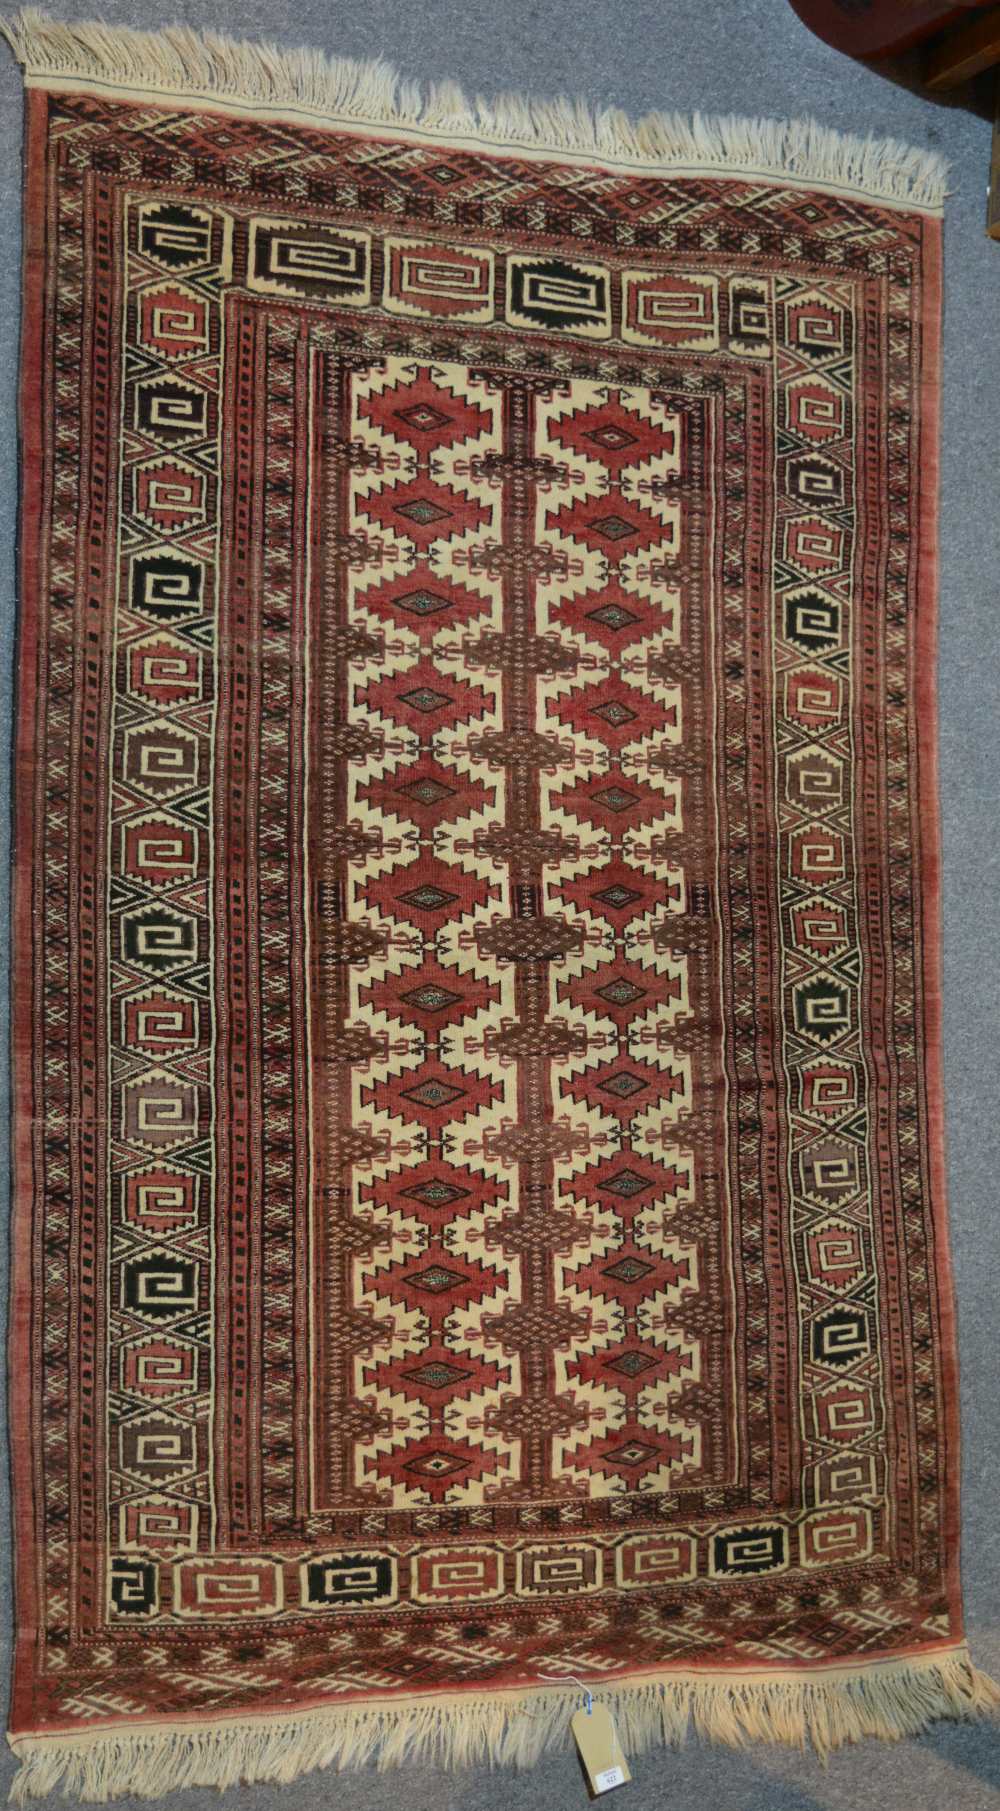 An Afghan rug with central medallion and geometric border, 201cm x 130cm